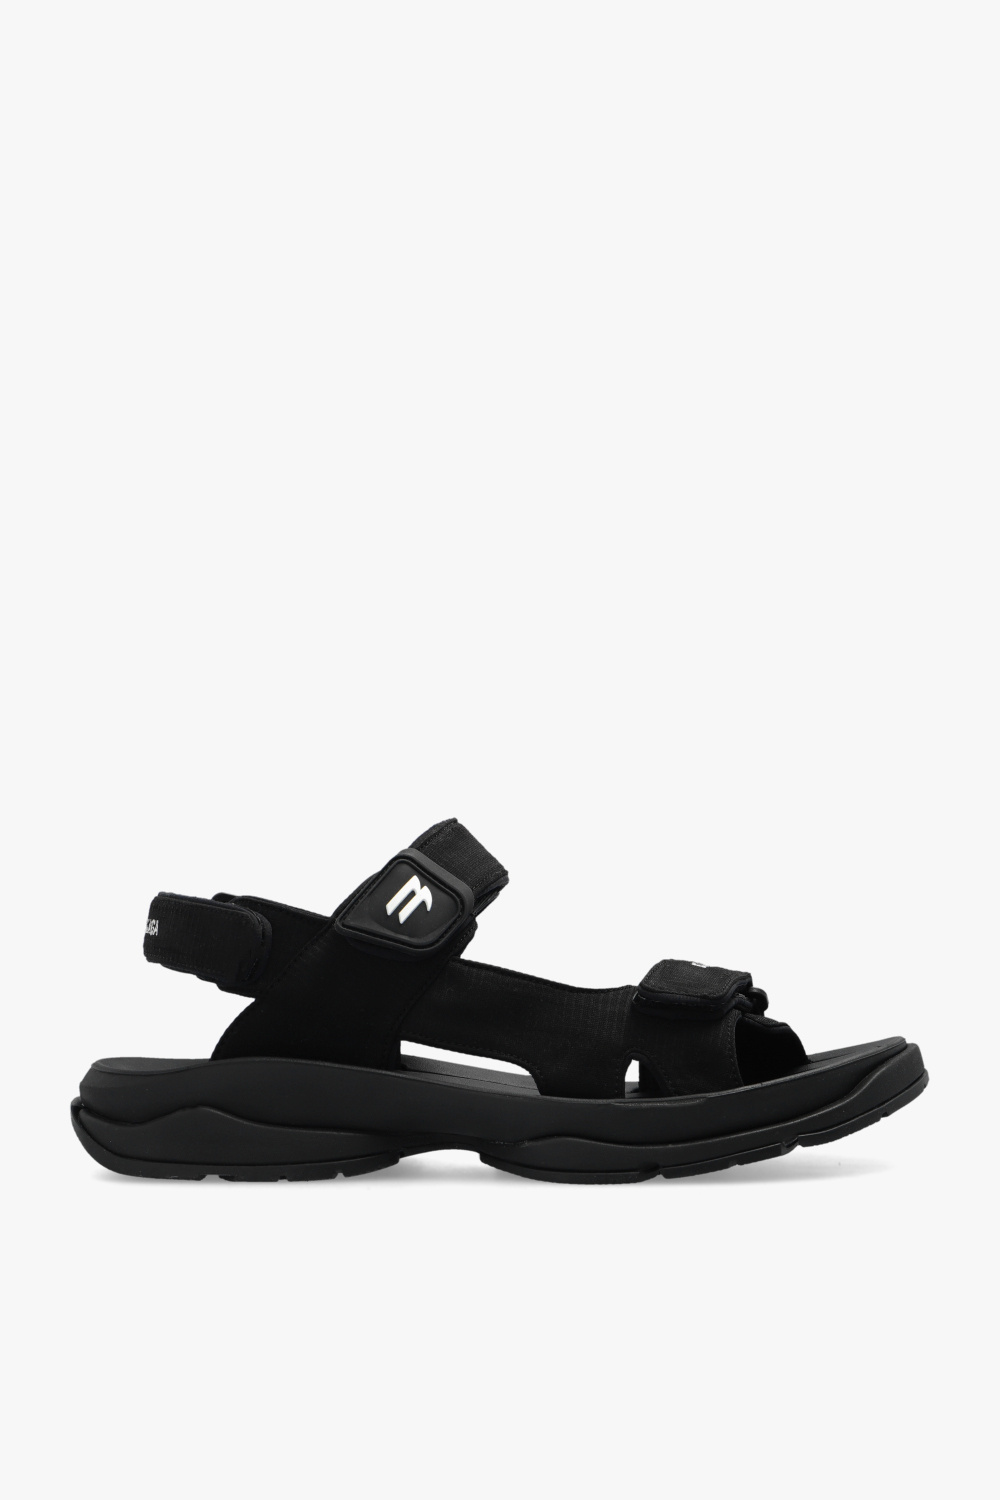 Balenciaga ‘Tourist’ sandals